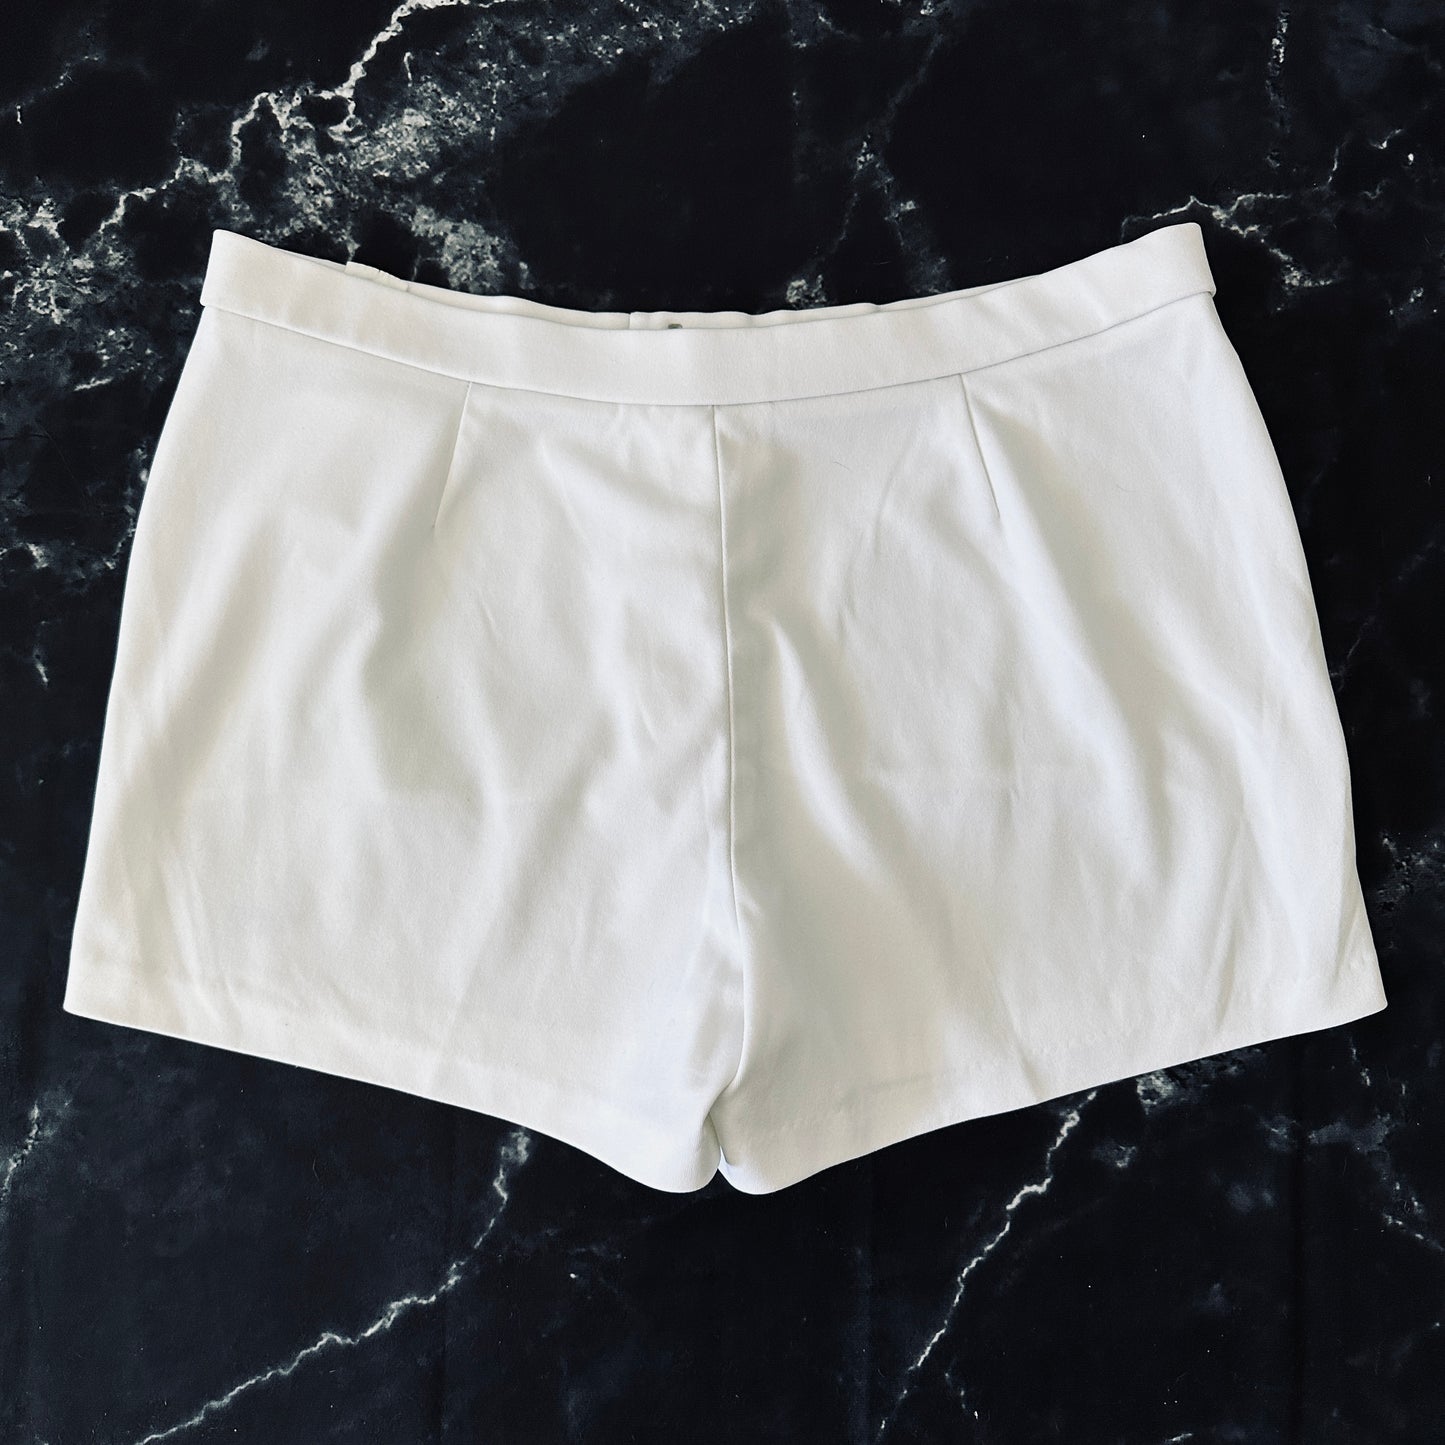 Adidas 80s Vintage Tennis Shorts - White - 52 / L